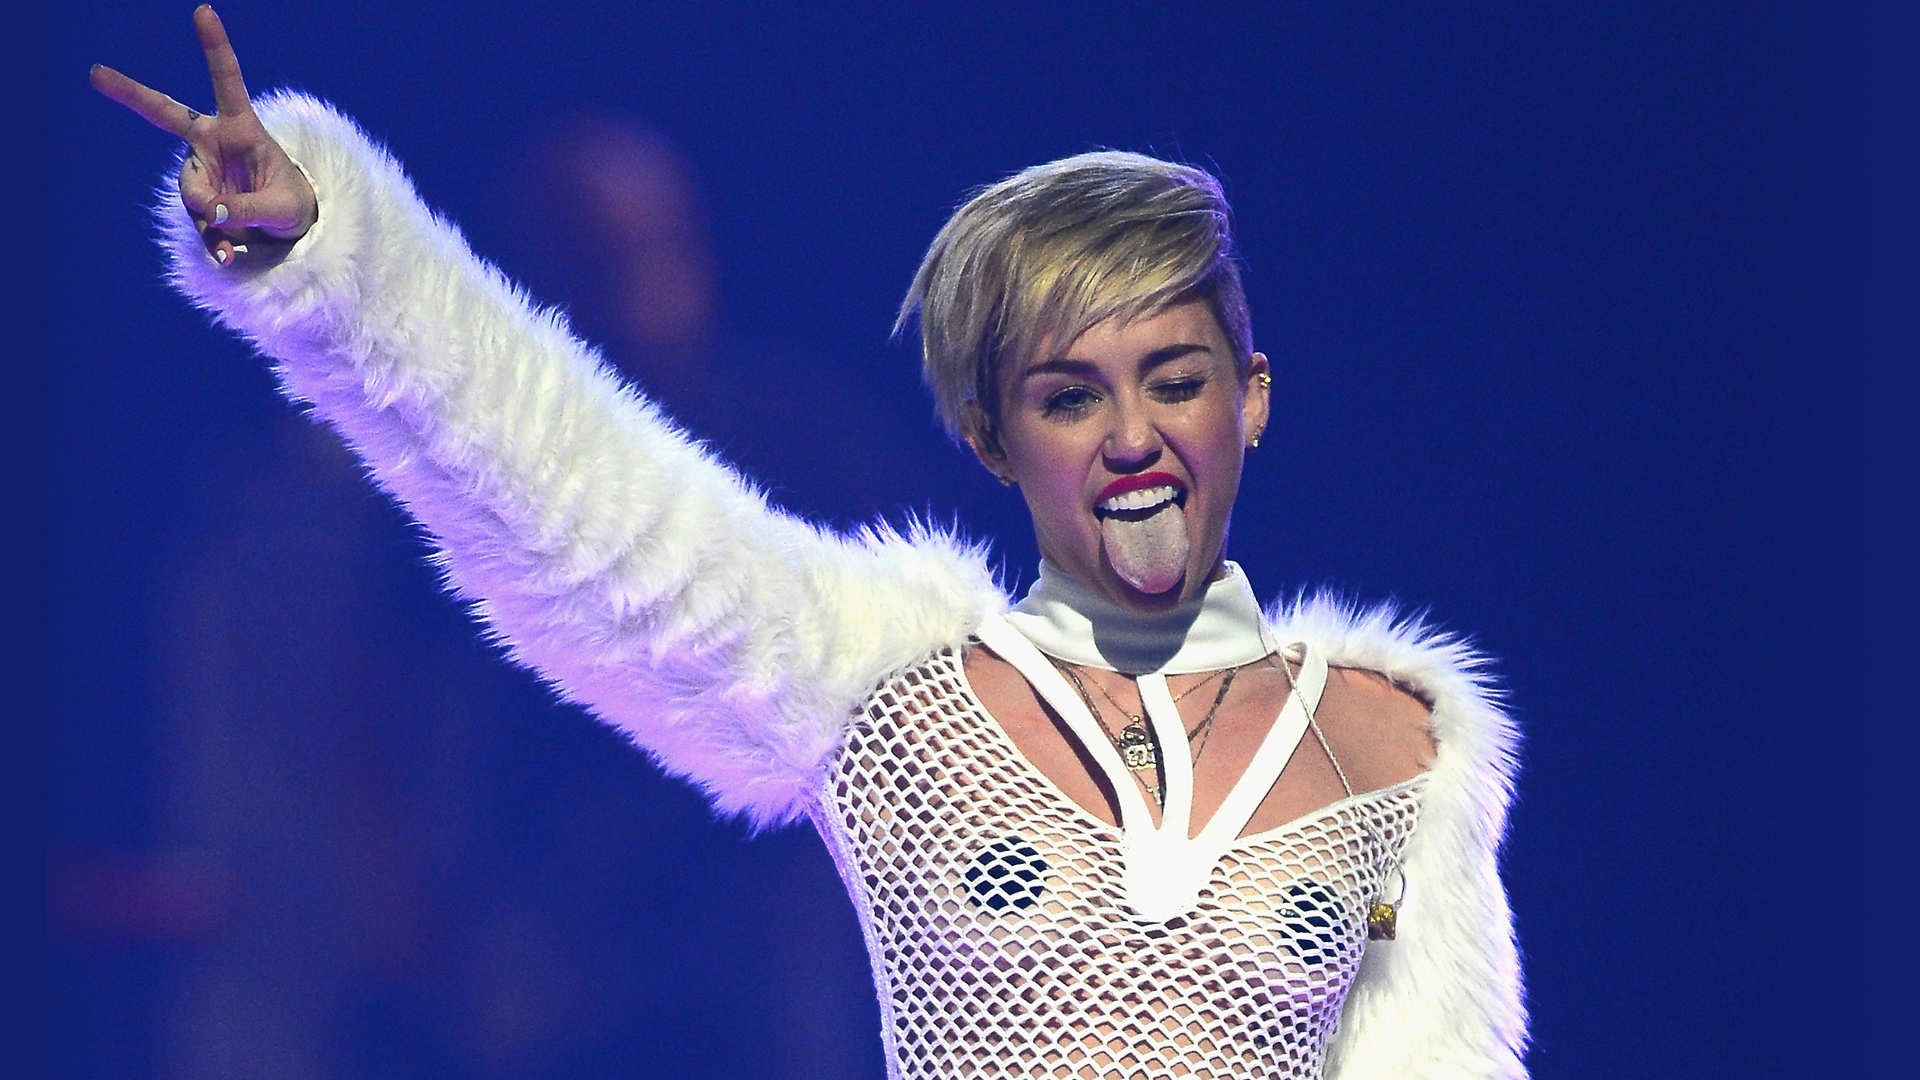 Miley Cyrus Shocks In Sheer Dress Pasties At Iheartradio Music